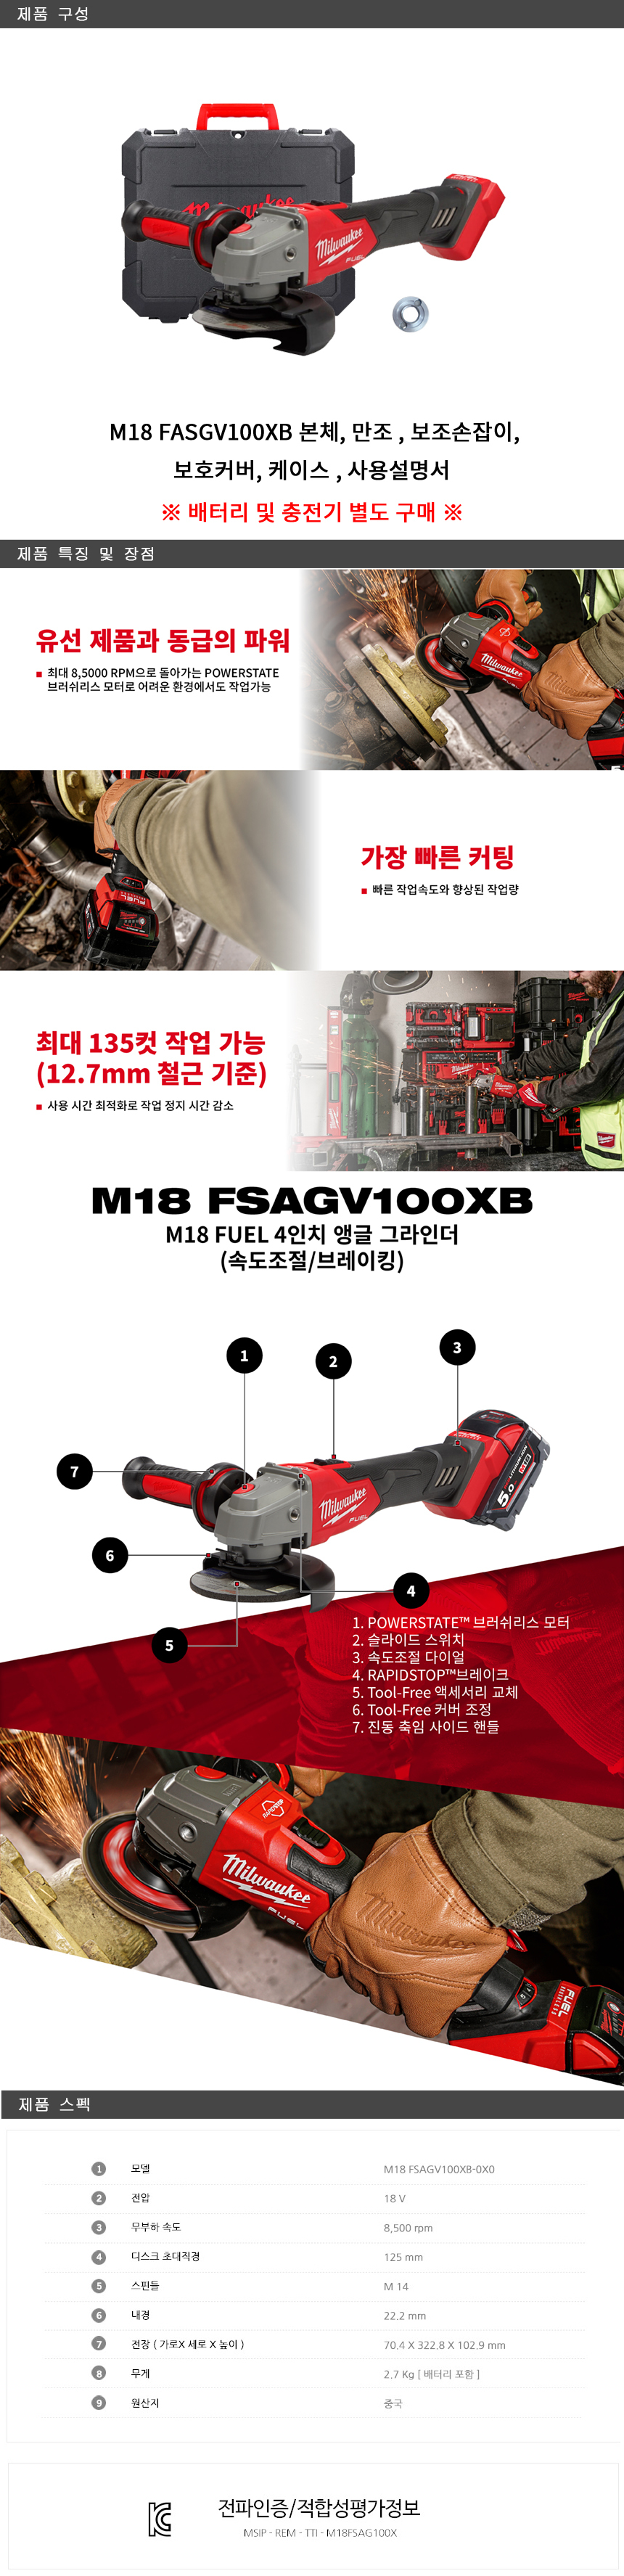 M18FSAGV100XB-0X0%201.jpg